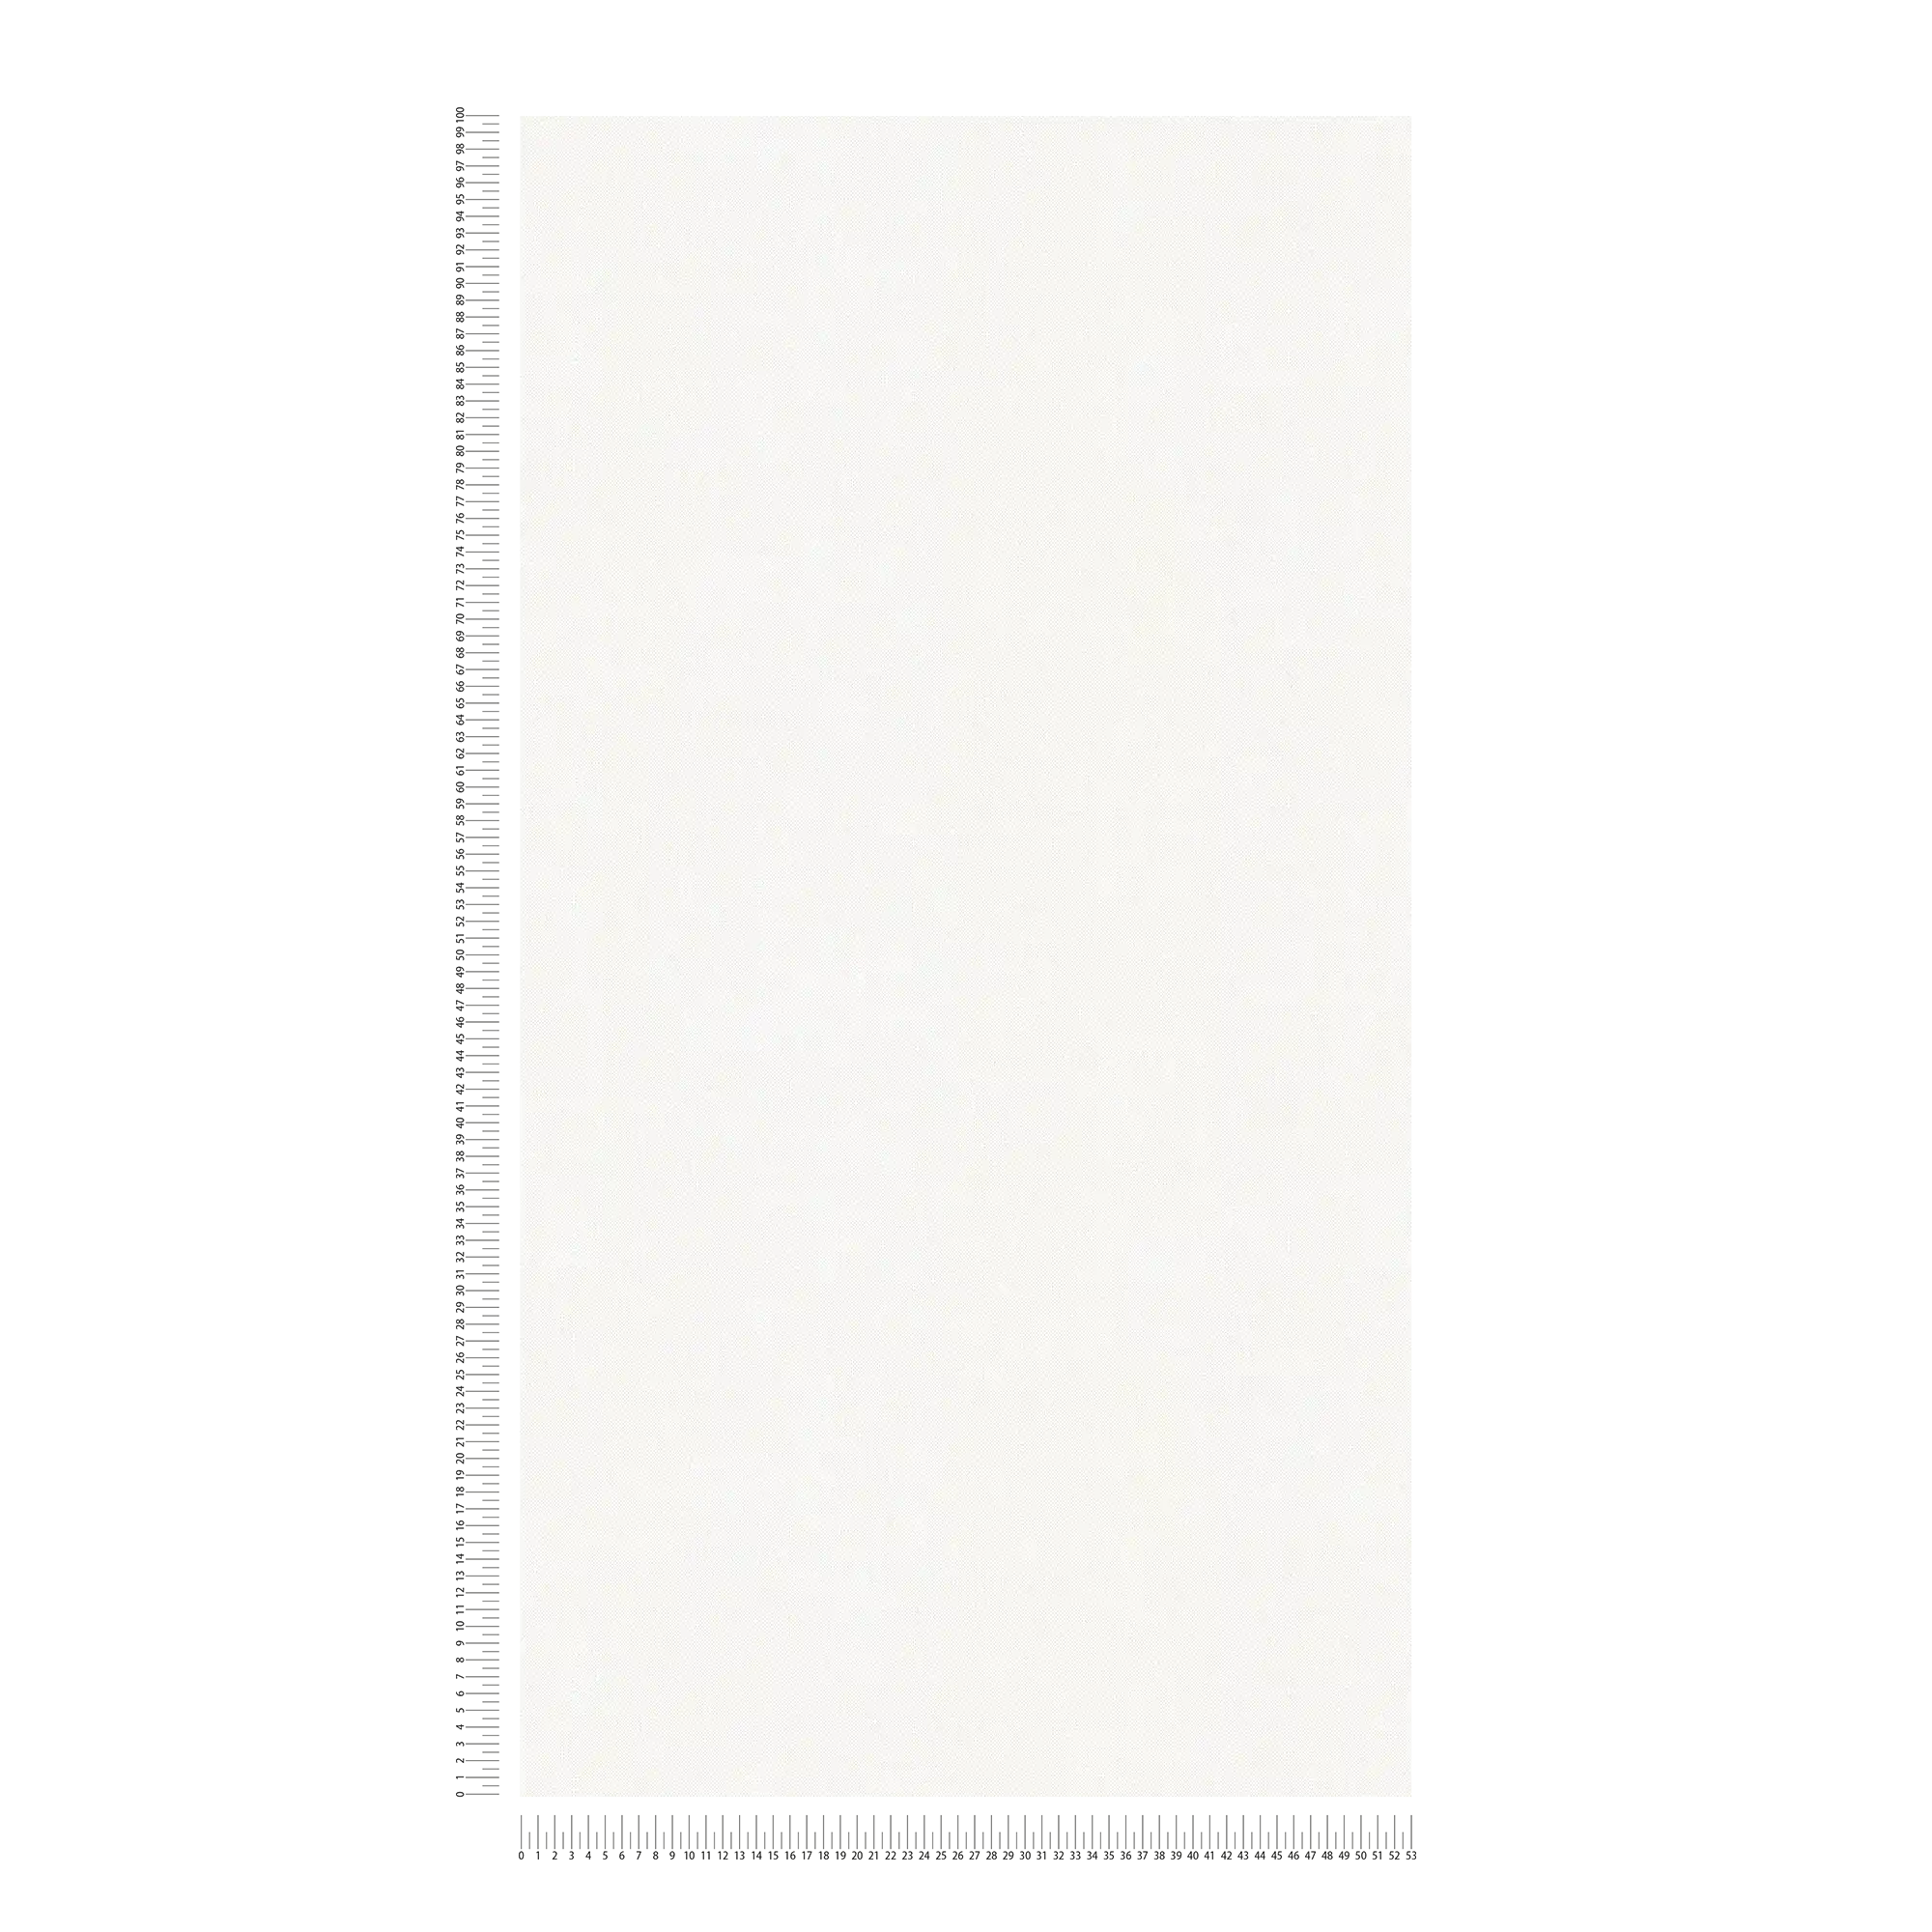             Plain wallpaper light, matte, white with linen texture
        